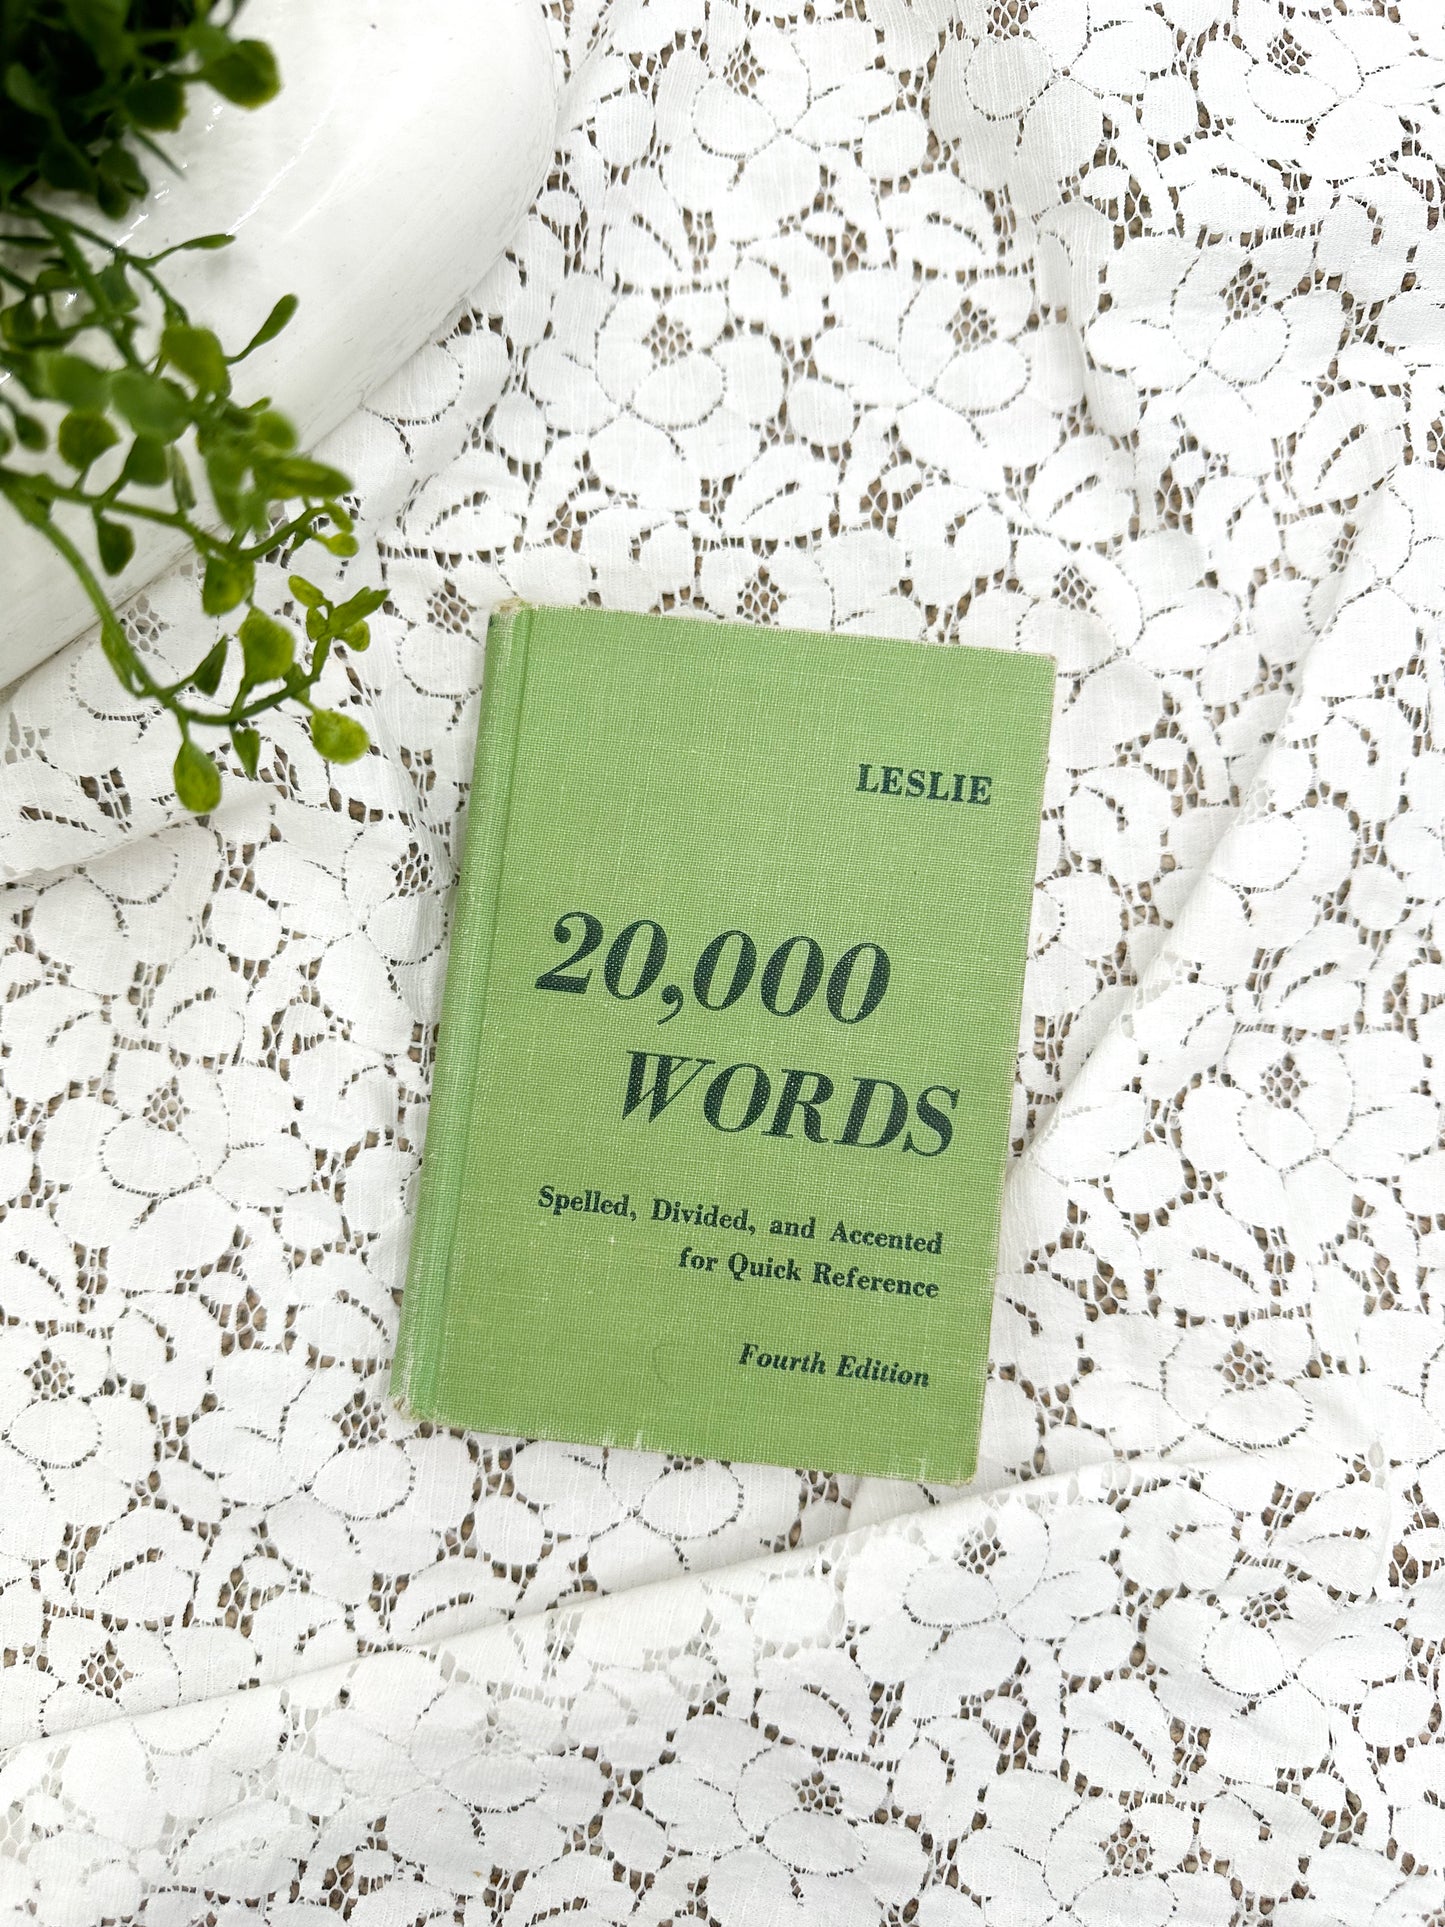 20,000 Words, 1959